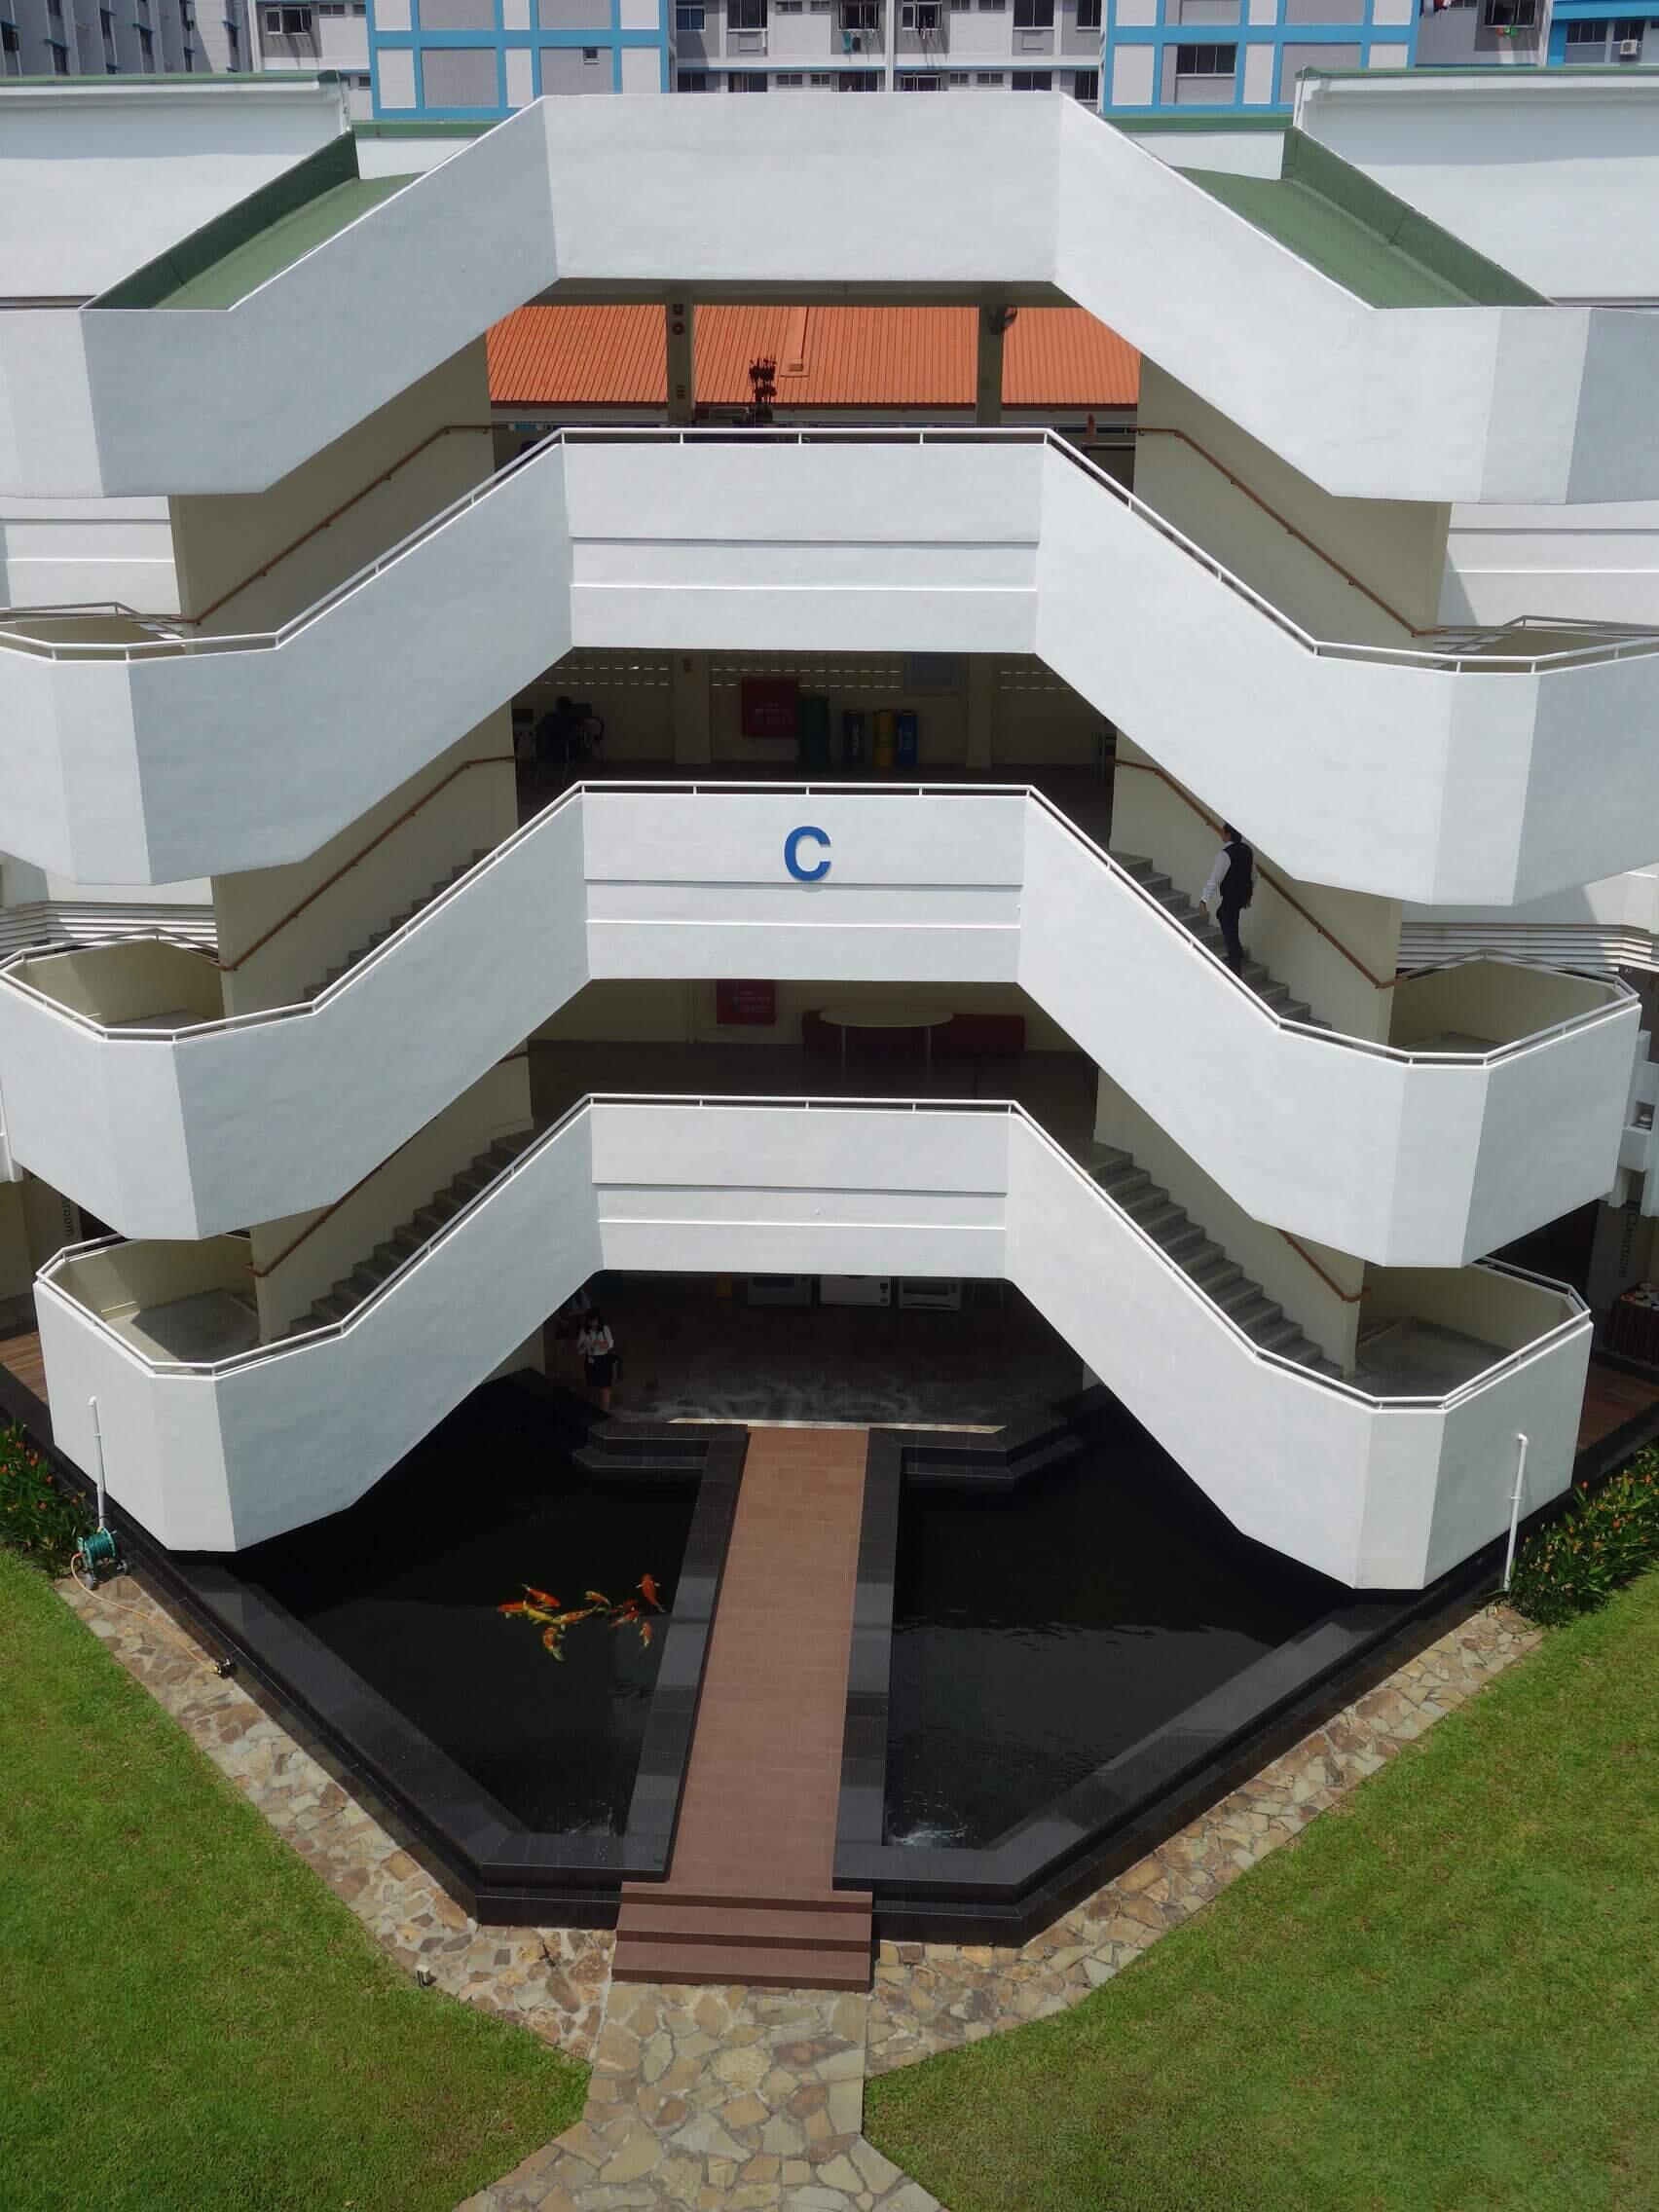 Studiere an der James Cook University in Singapur